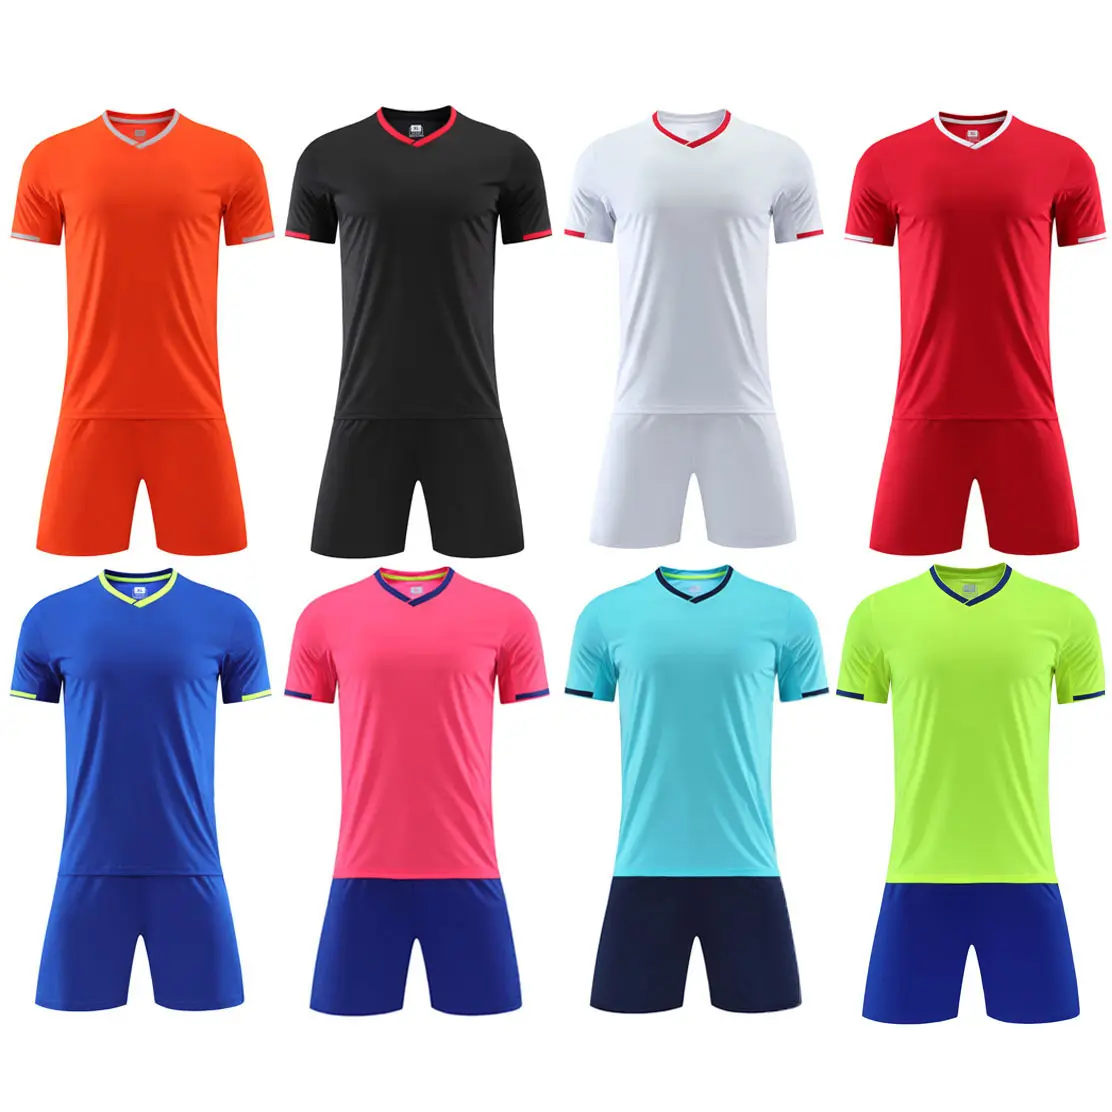 Jersey produsen pakaian latihan kustom, kit sepak bola untuk tim poliester/nilon potongan otomatis